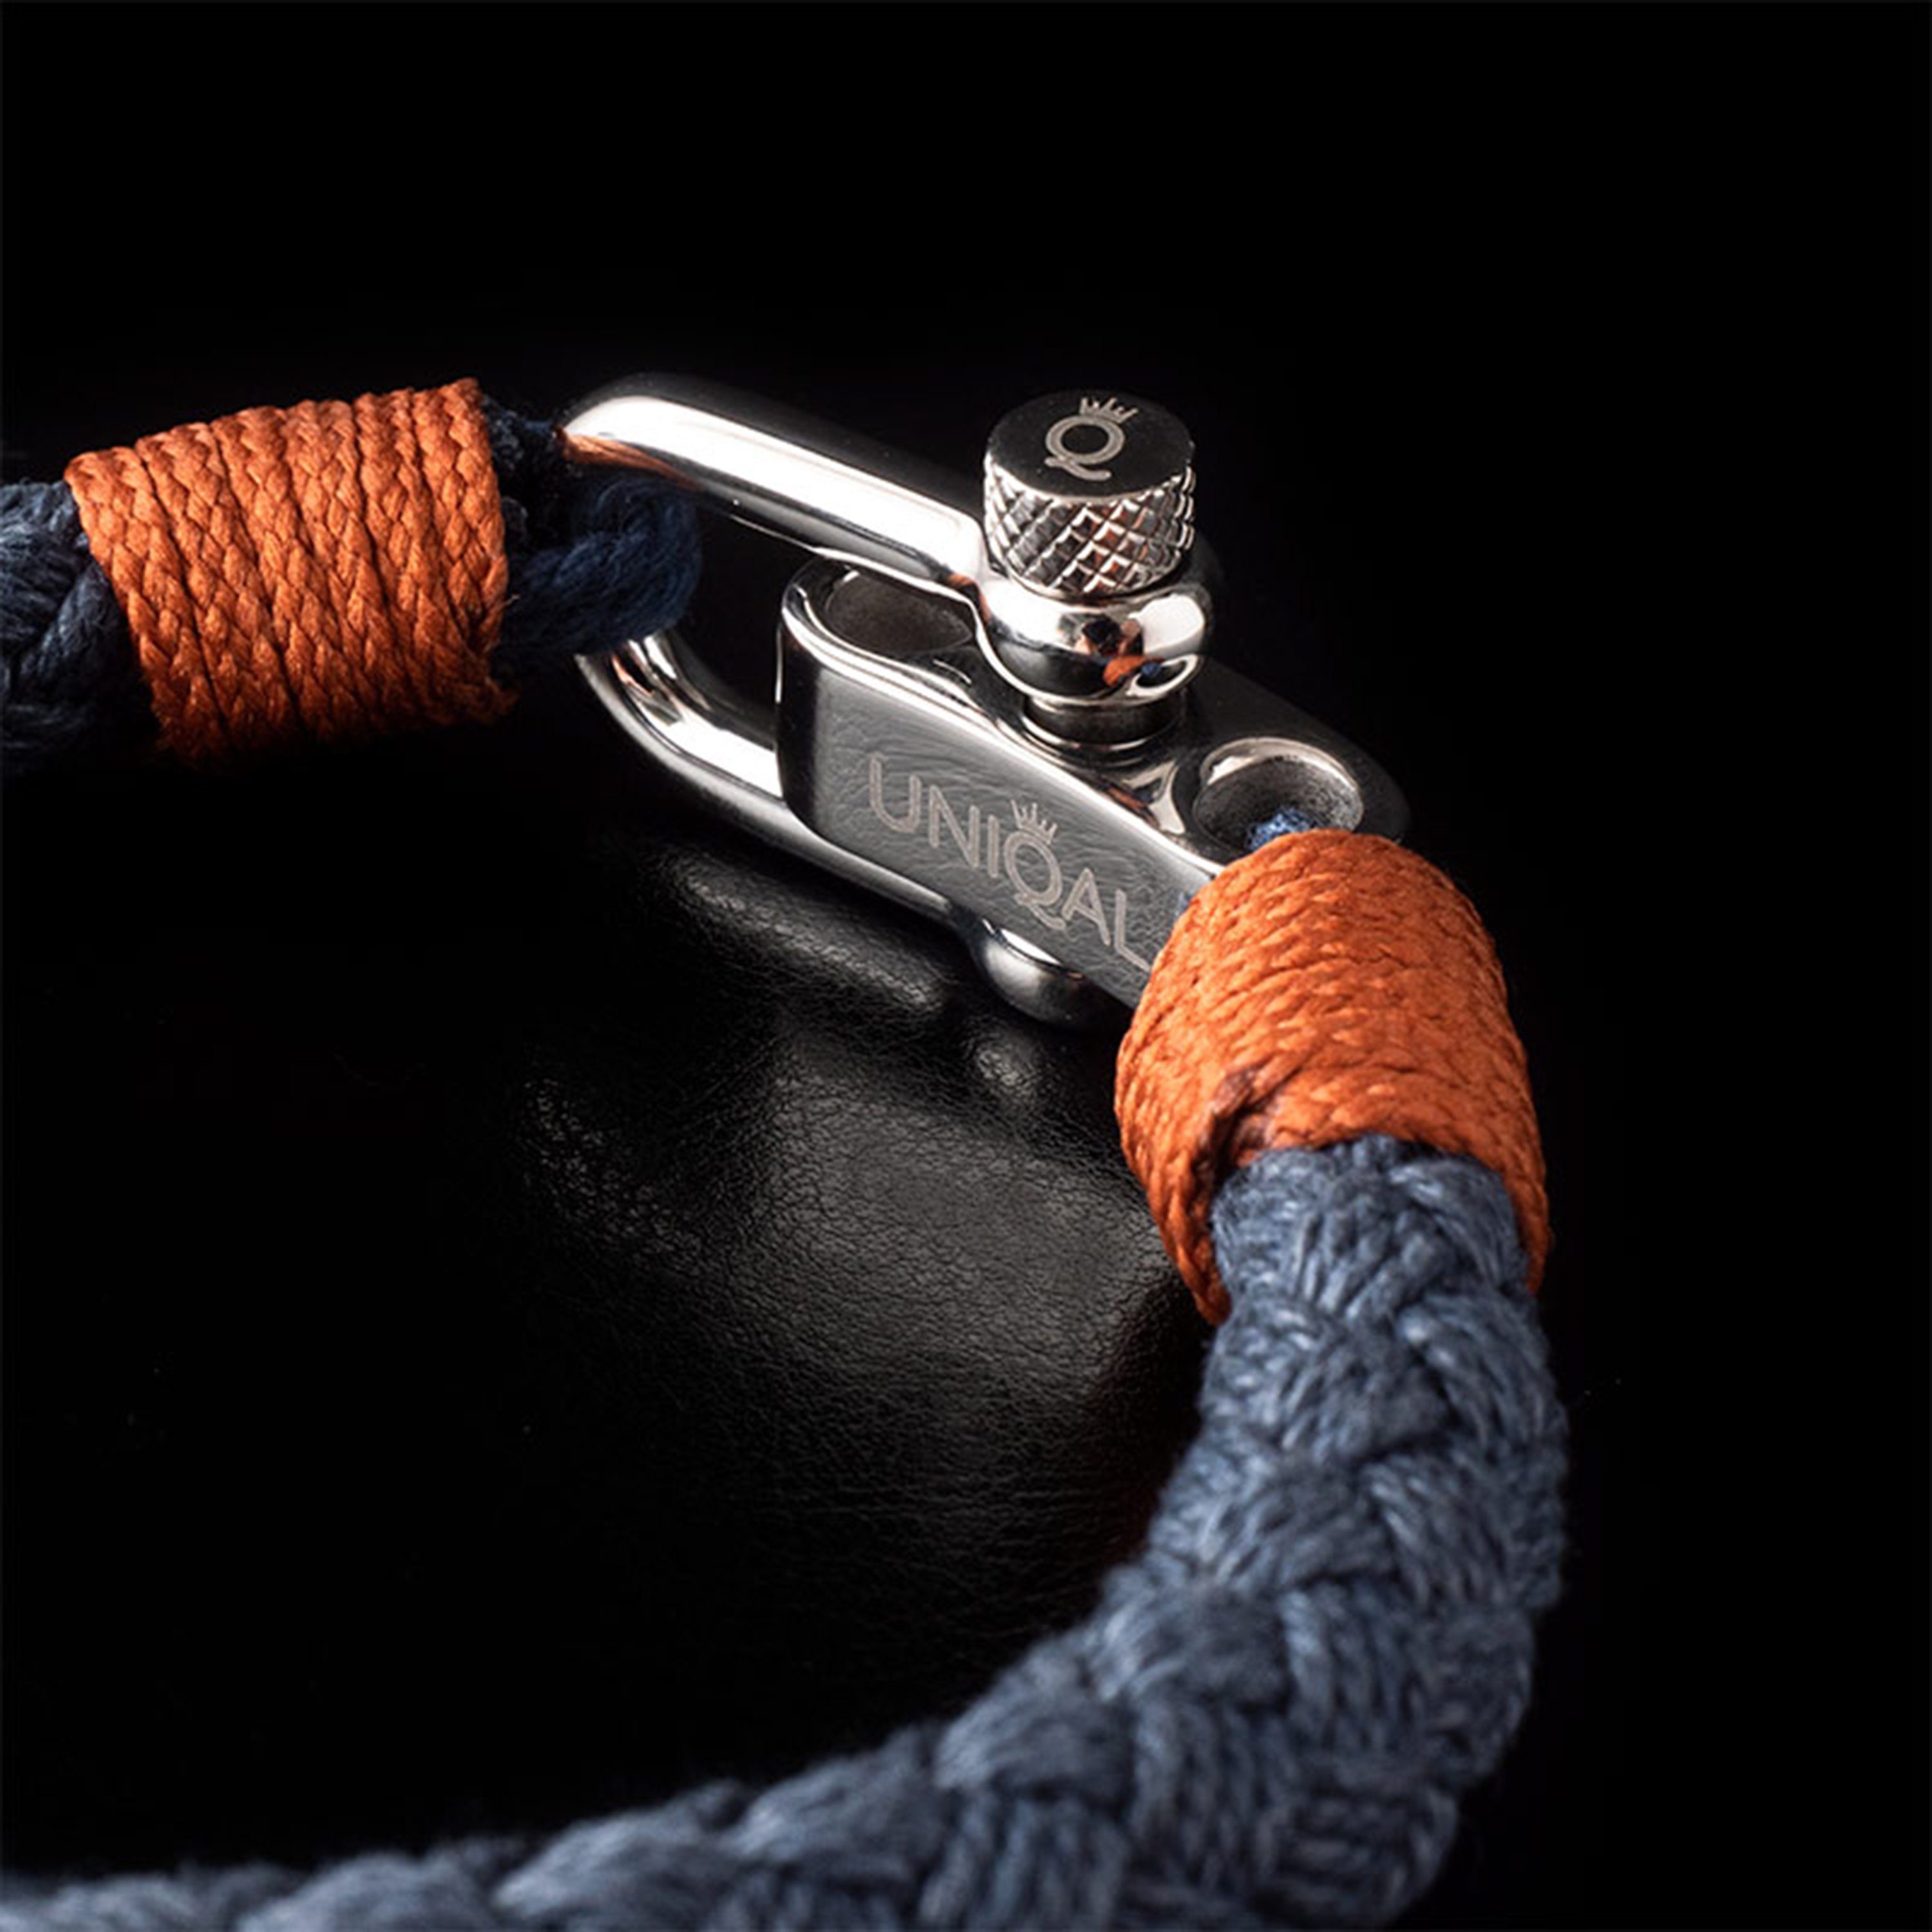 UNIQAL.de Style, Segeltau, Segeltau verschluss nautics, aus "TAUWERK" Armband (Edelstahl, Armband Maritime handgefertigt) Schäckel Casual